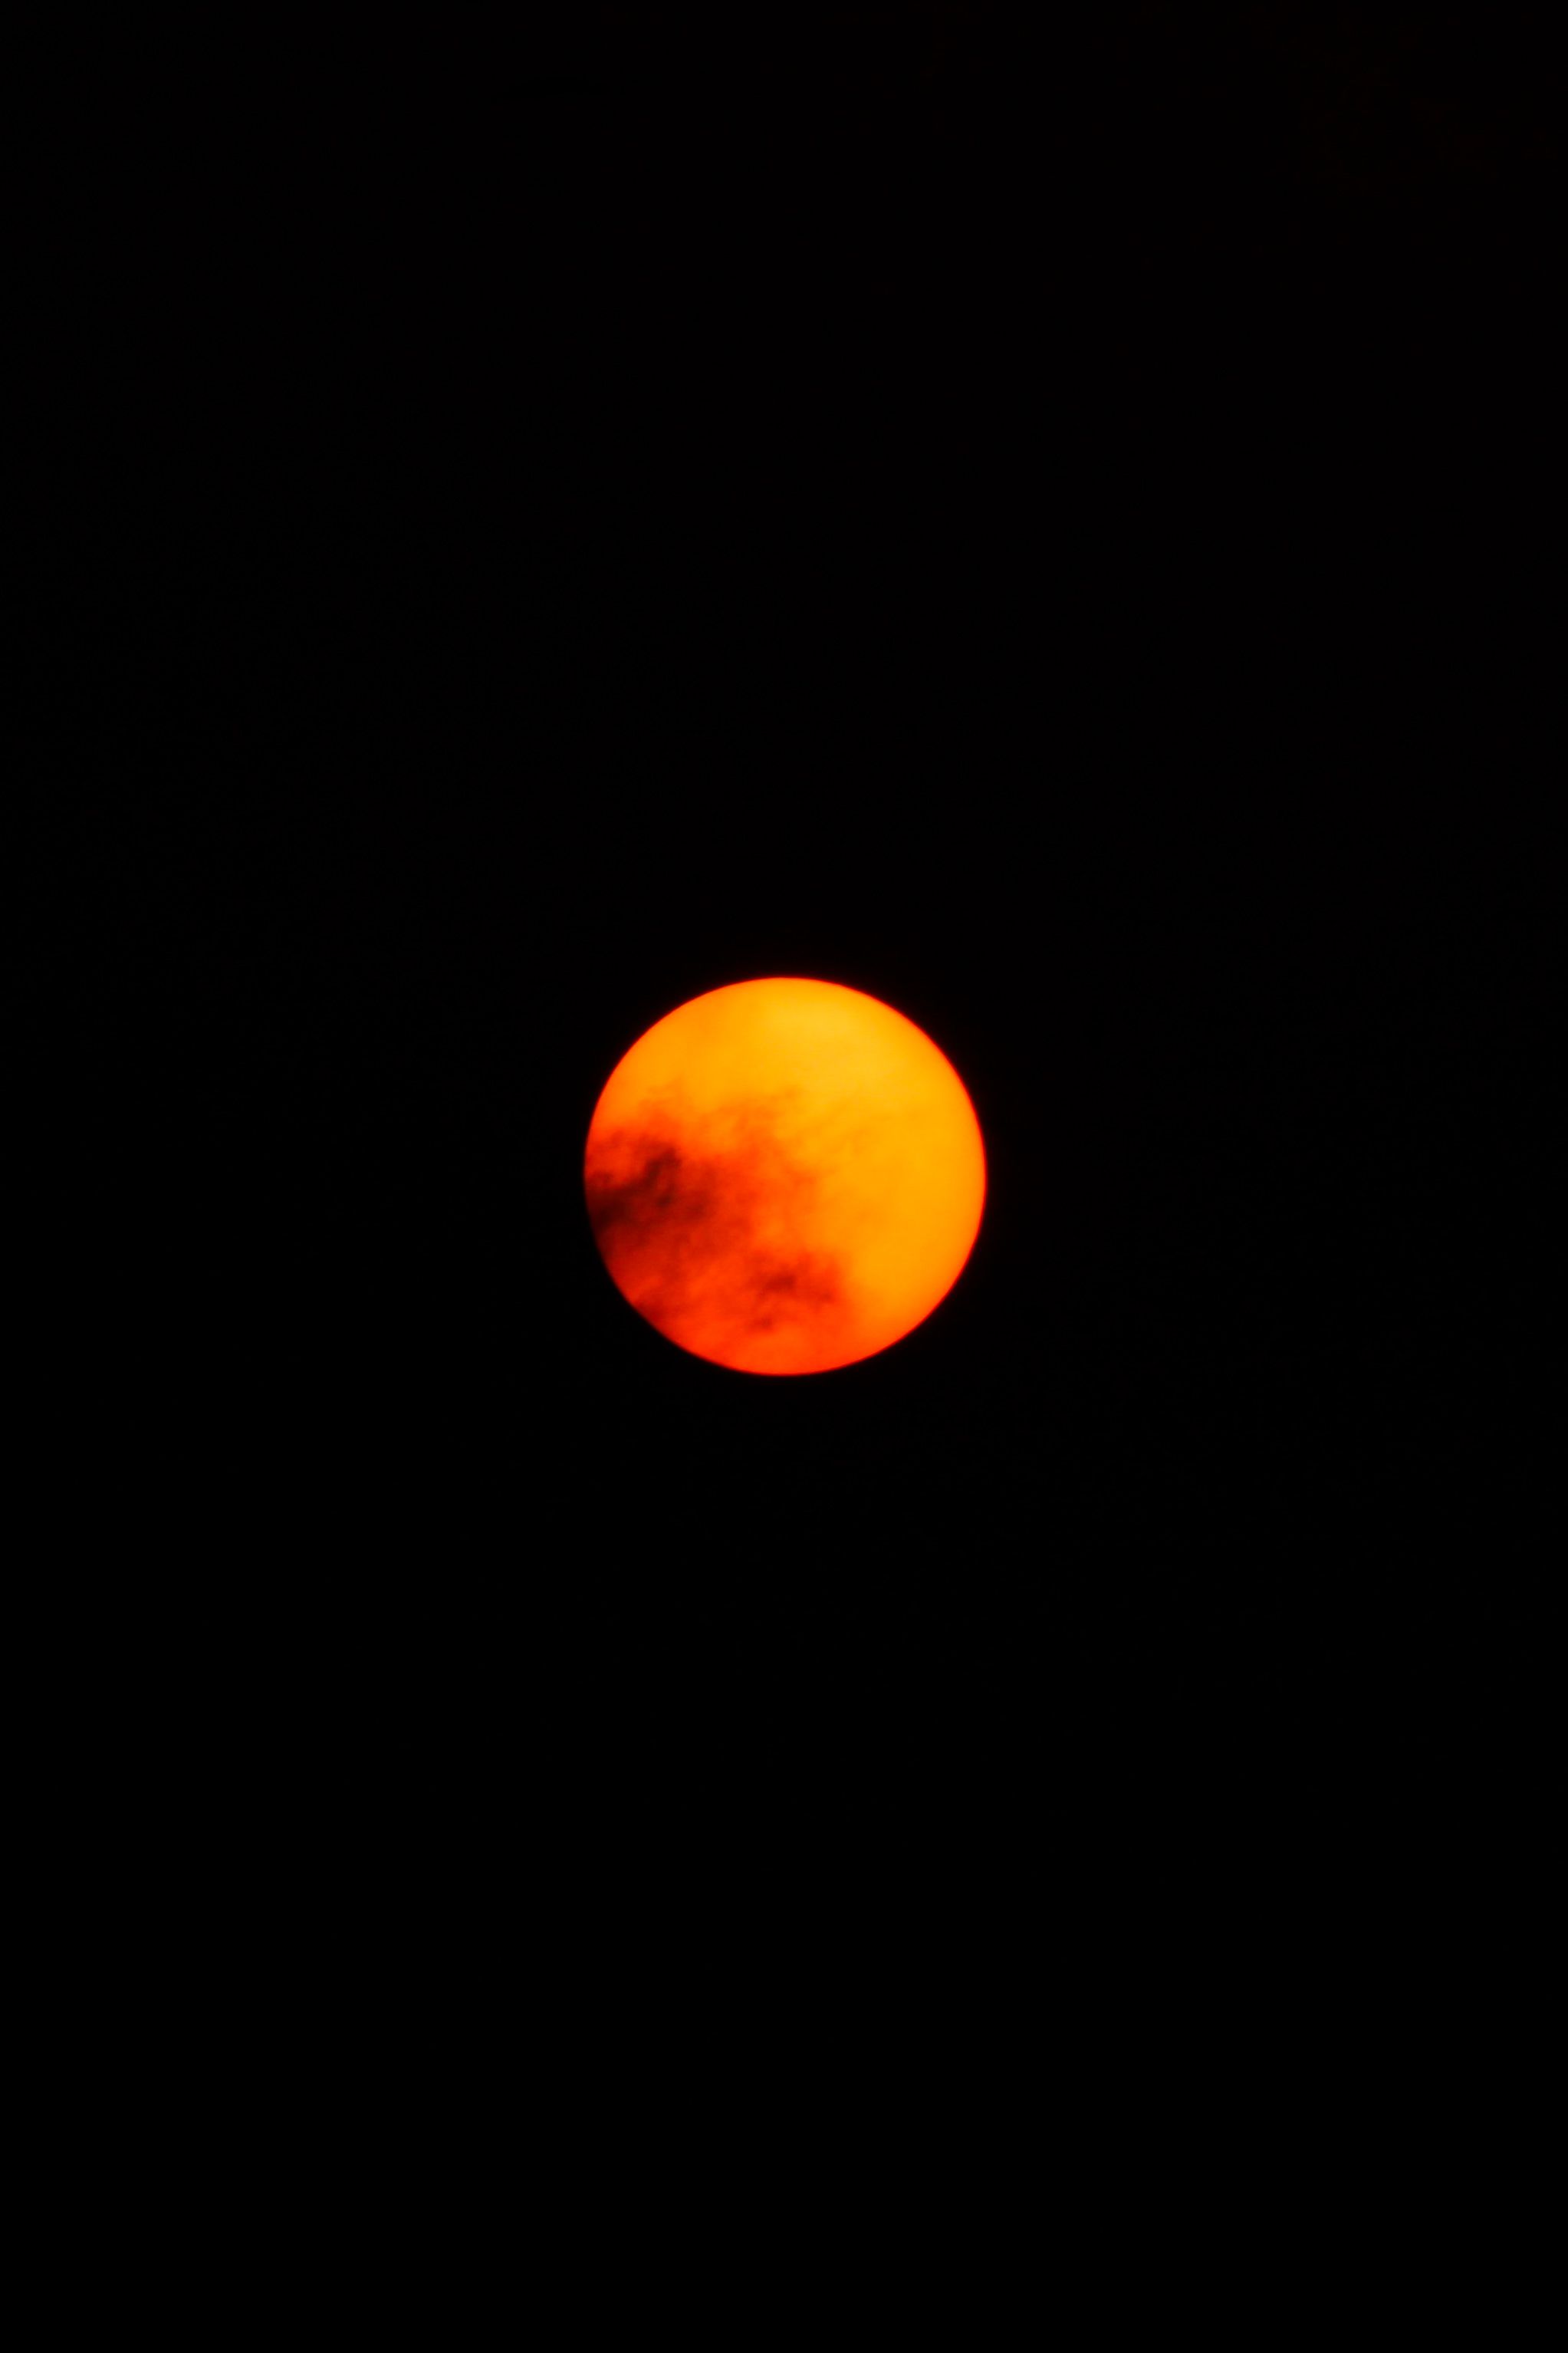 A red sun setting behind a black sky. - Dark orange